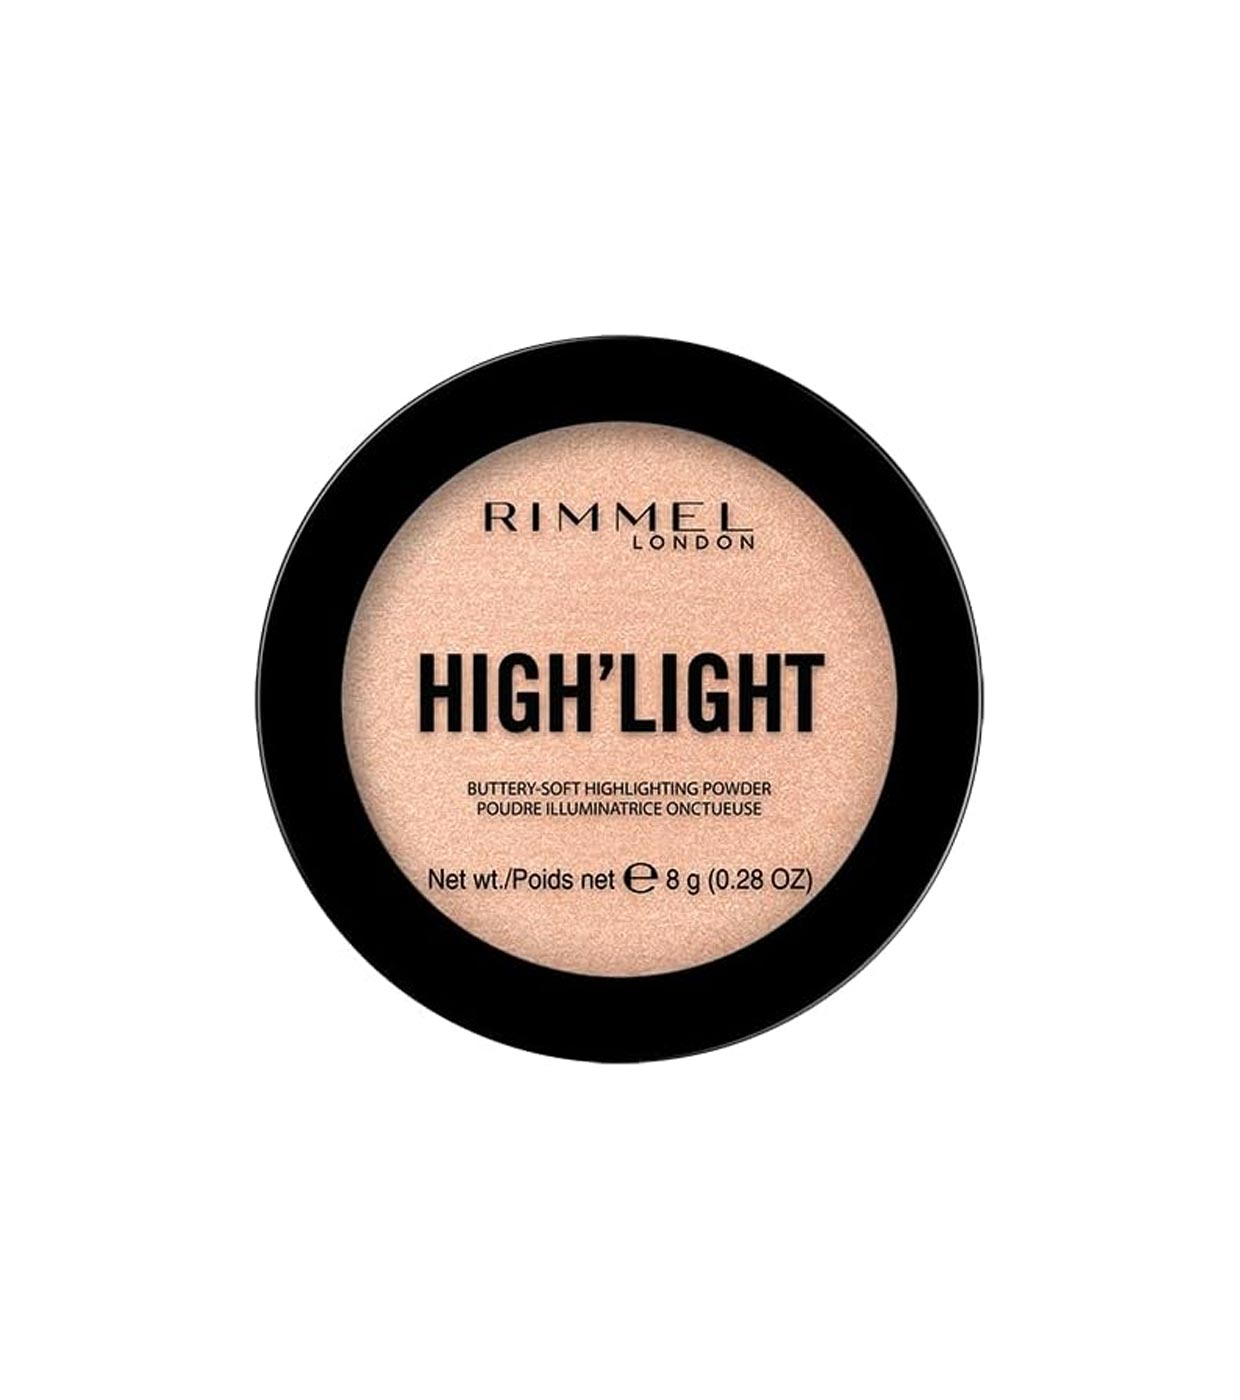 Buy Rimmel London - #Colortostart makeup set